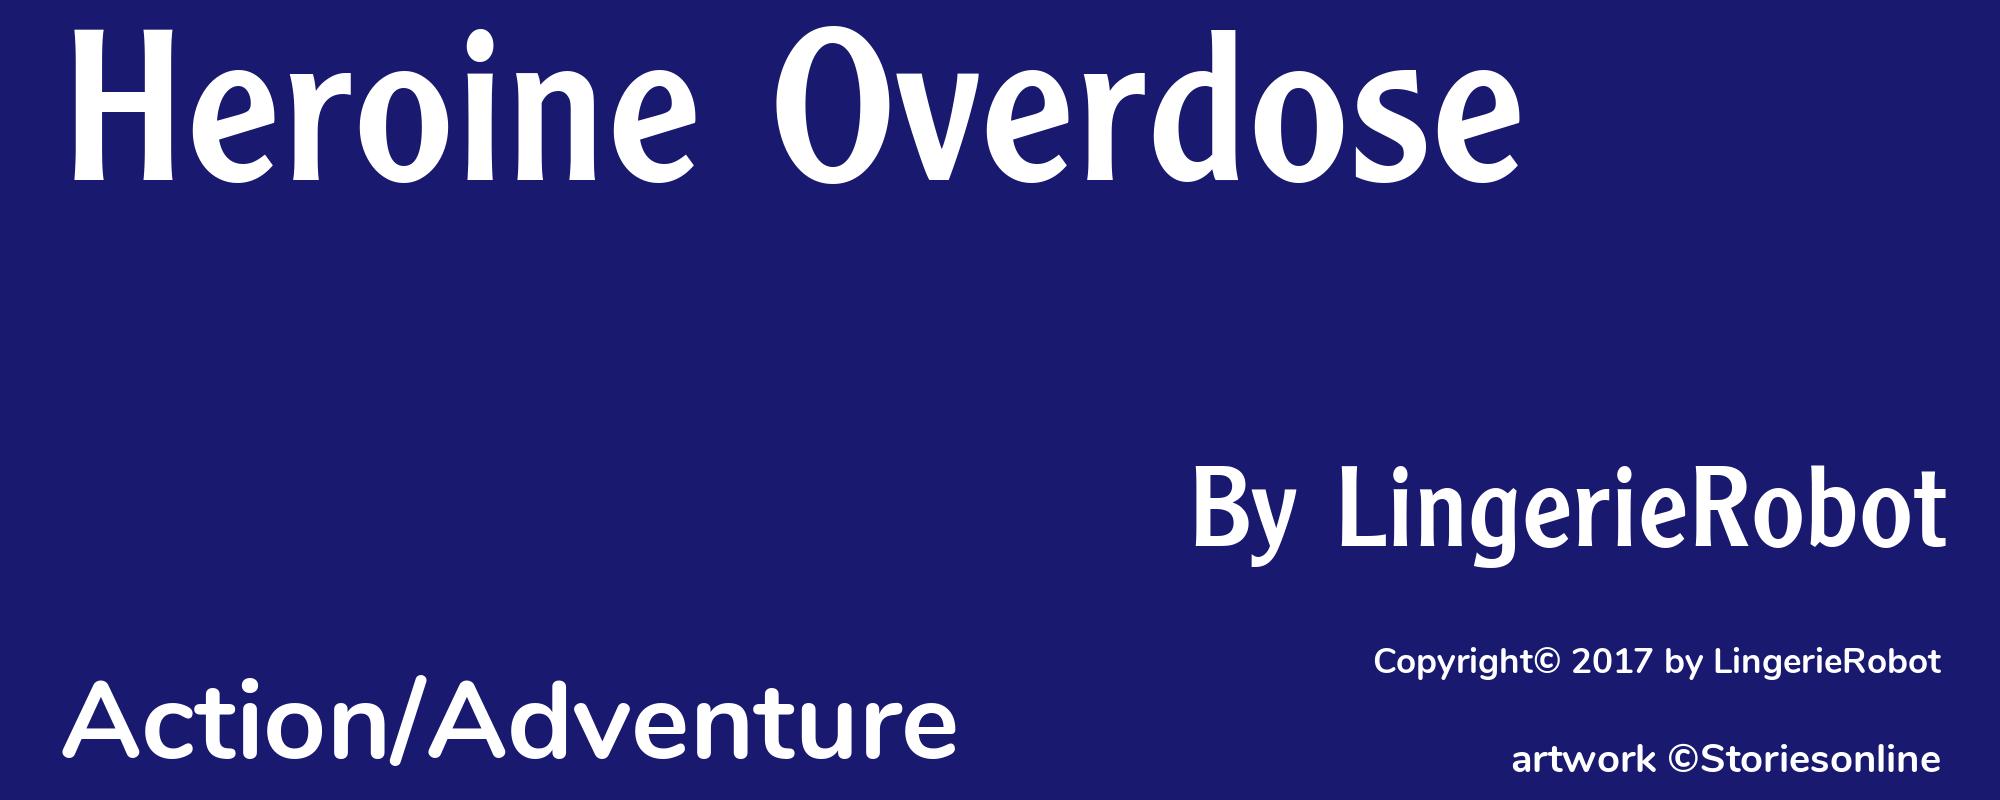 Heroine Overdose - Cover